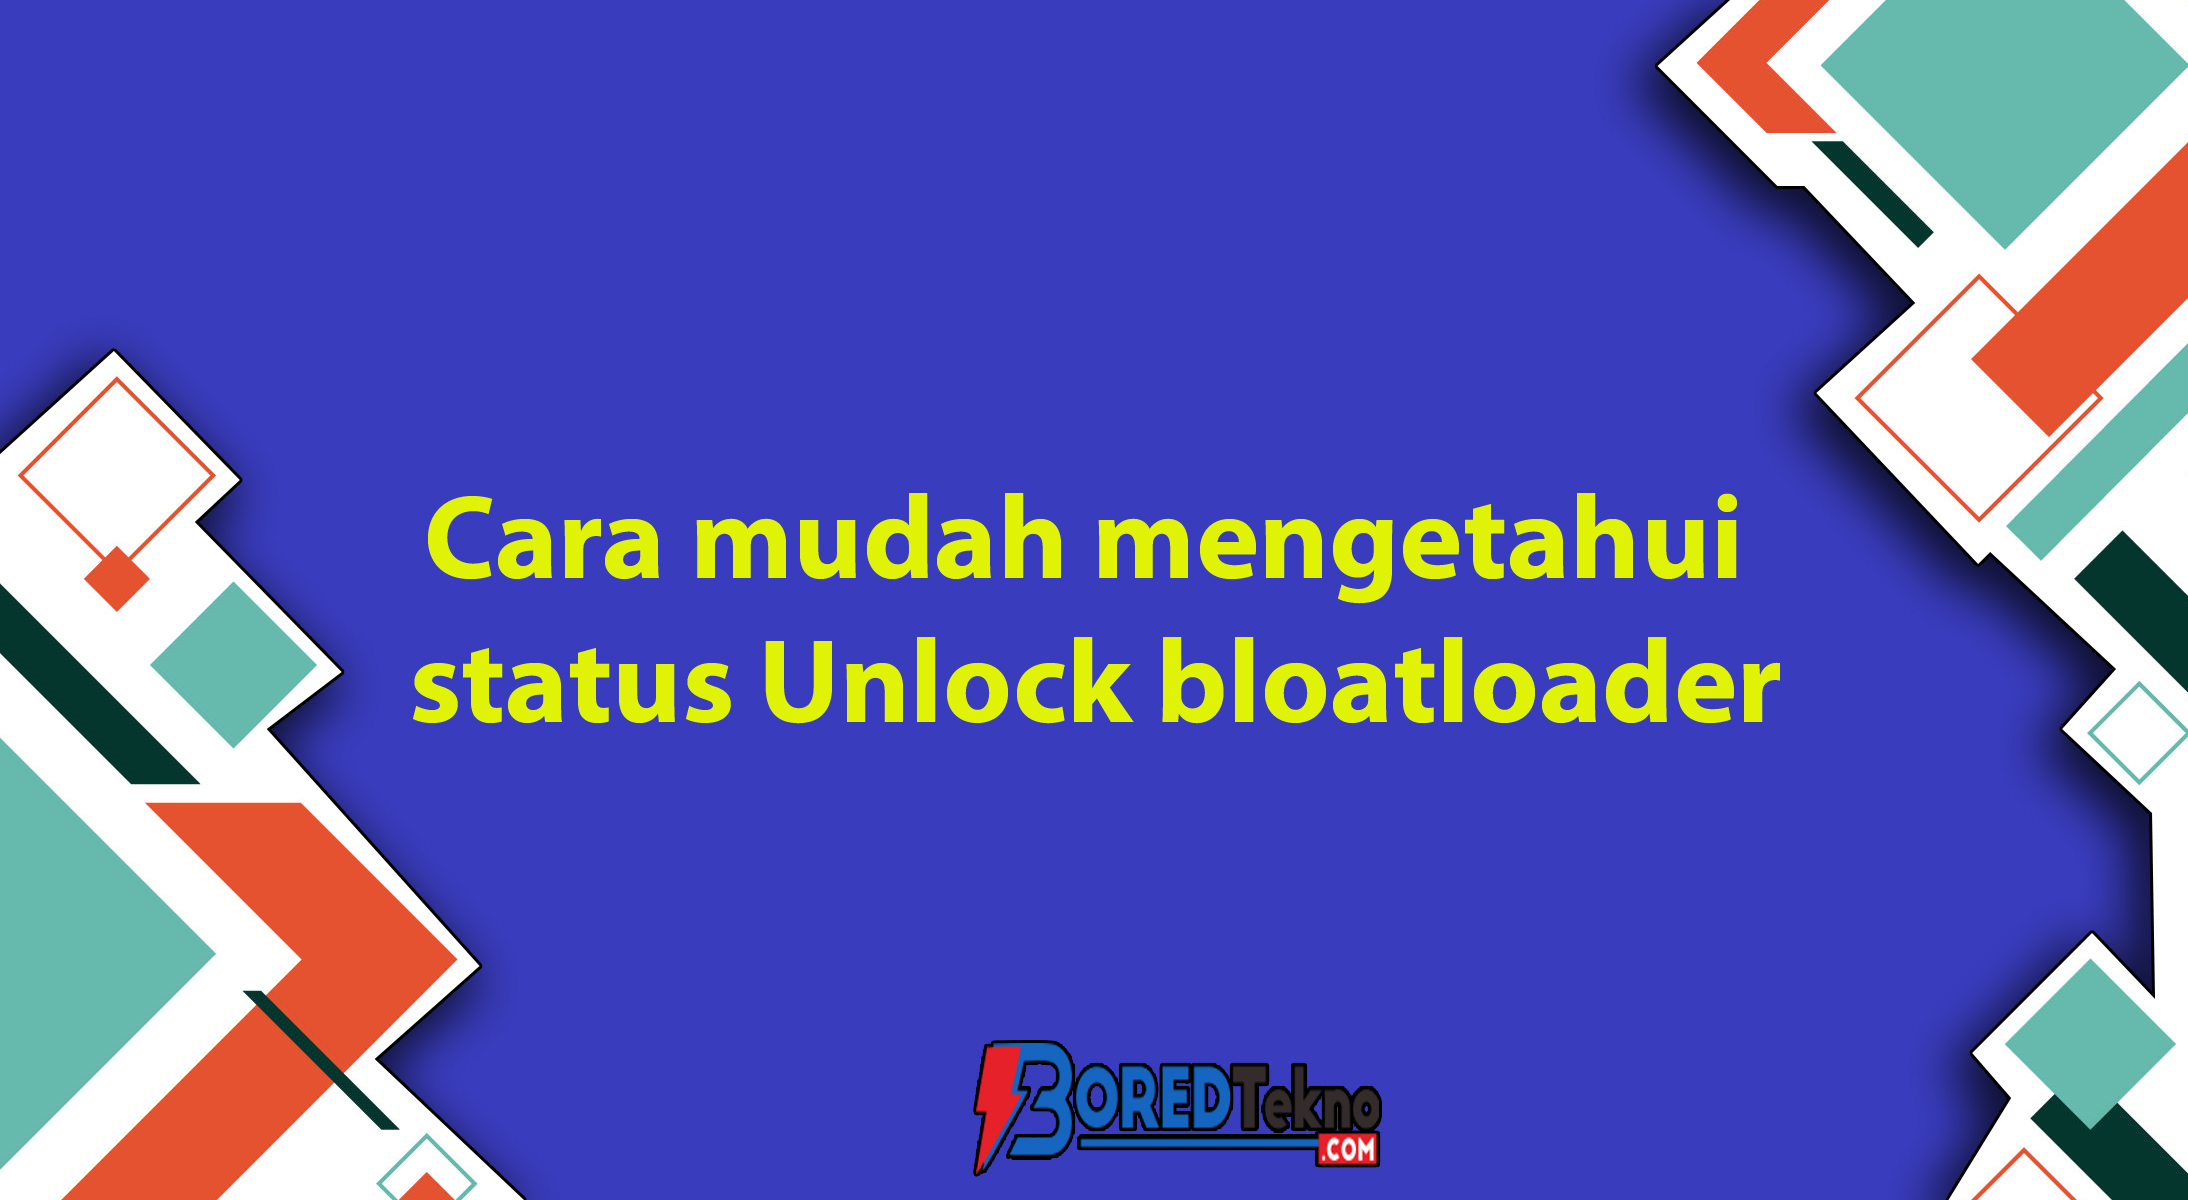 Cara mudah mengetahui status Unlock bloatloader